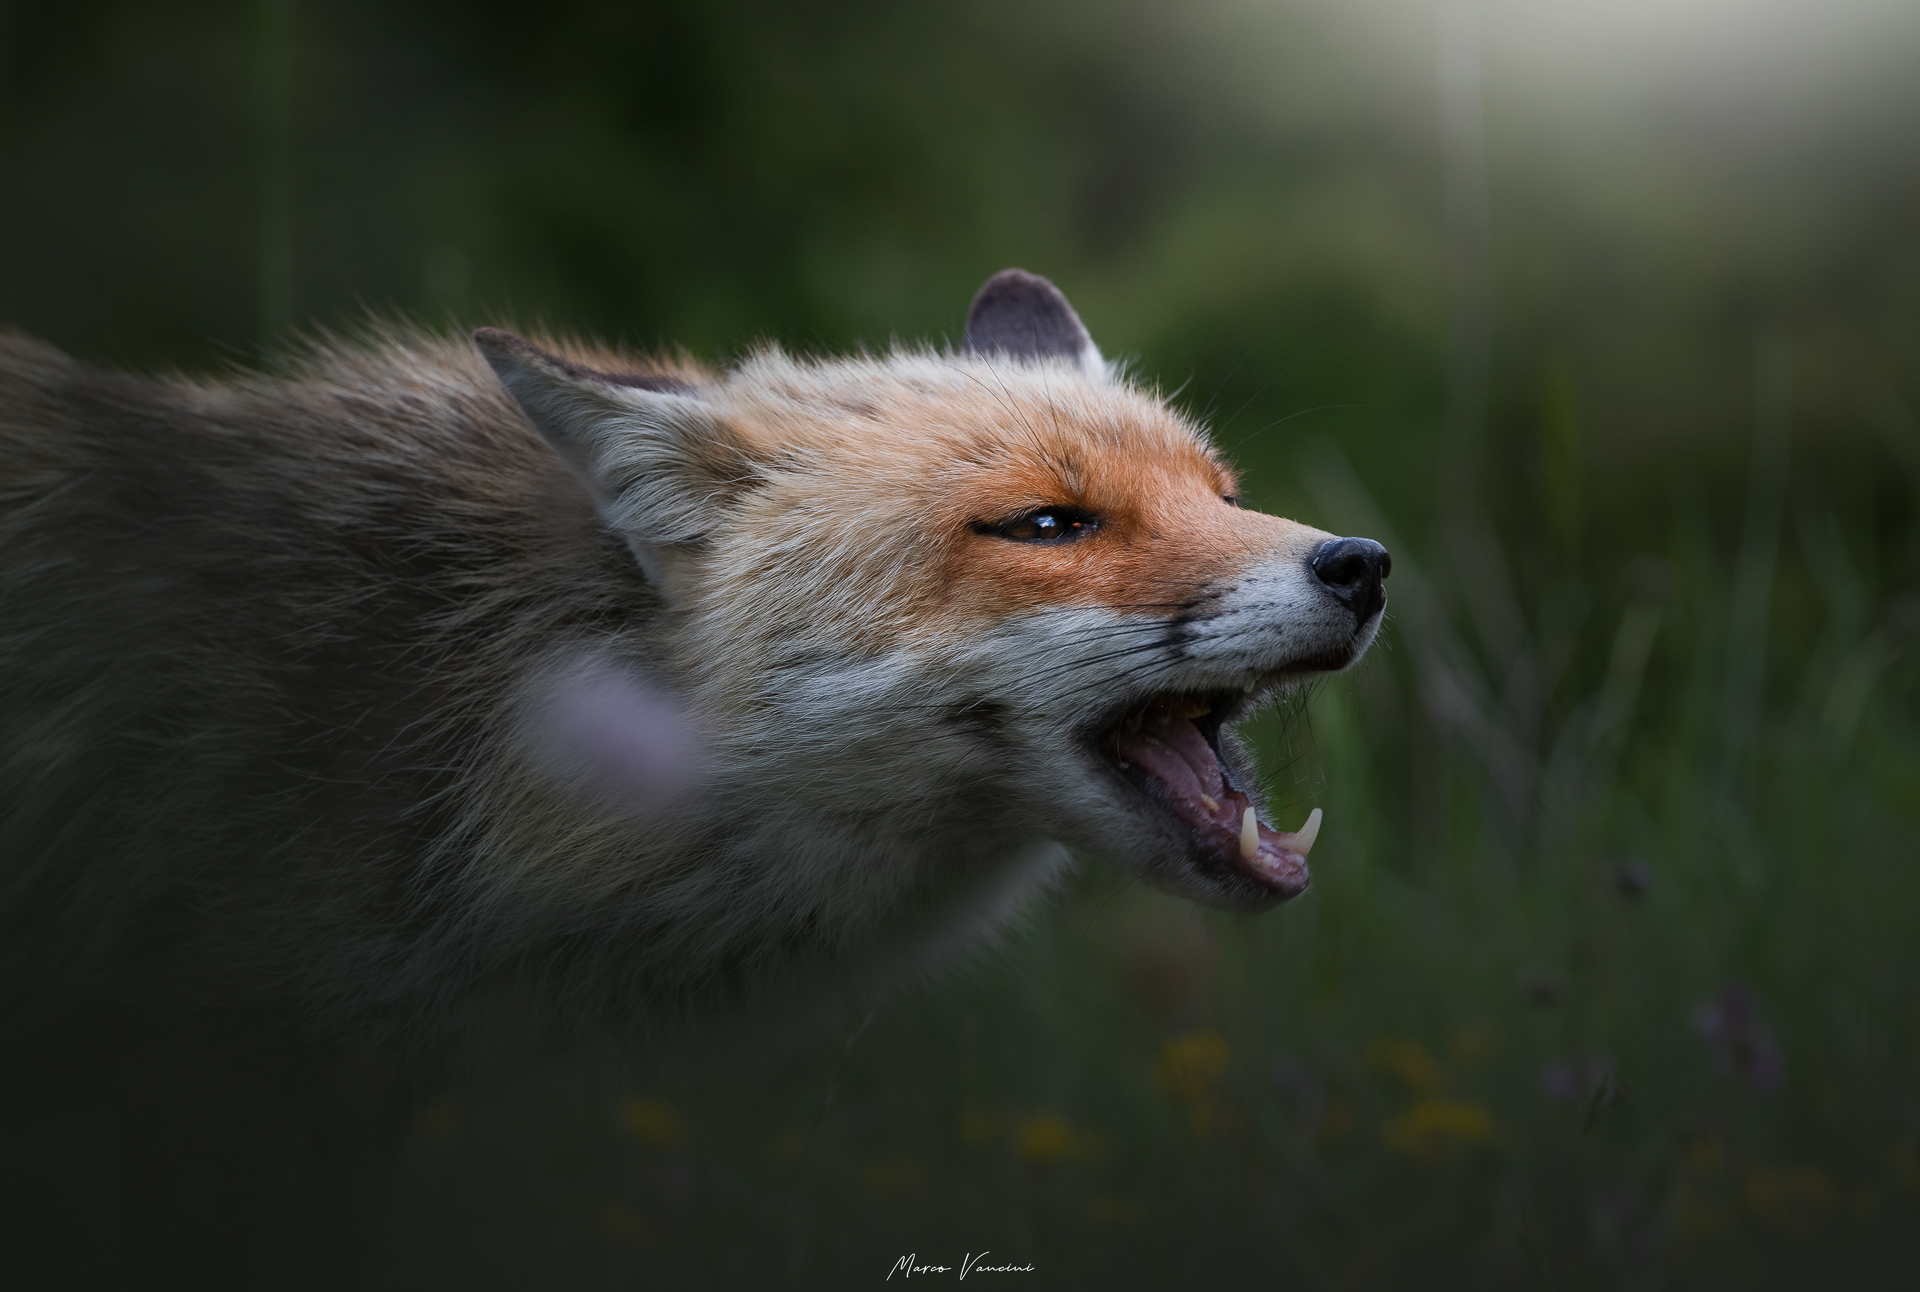 Always beautiful the fox ...